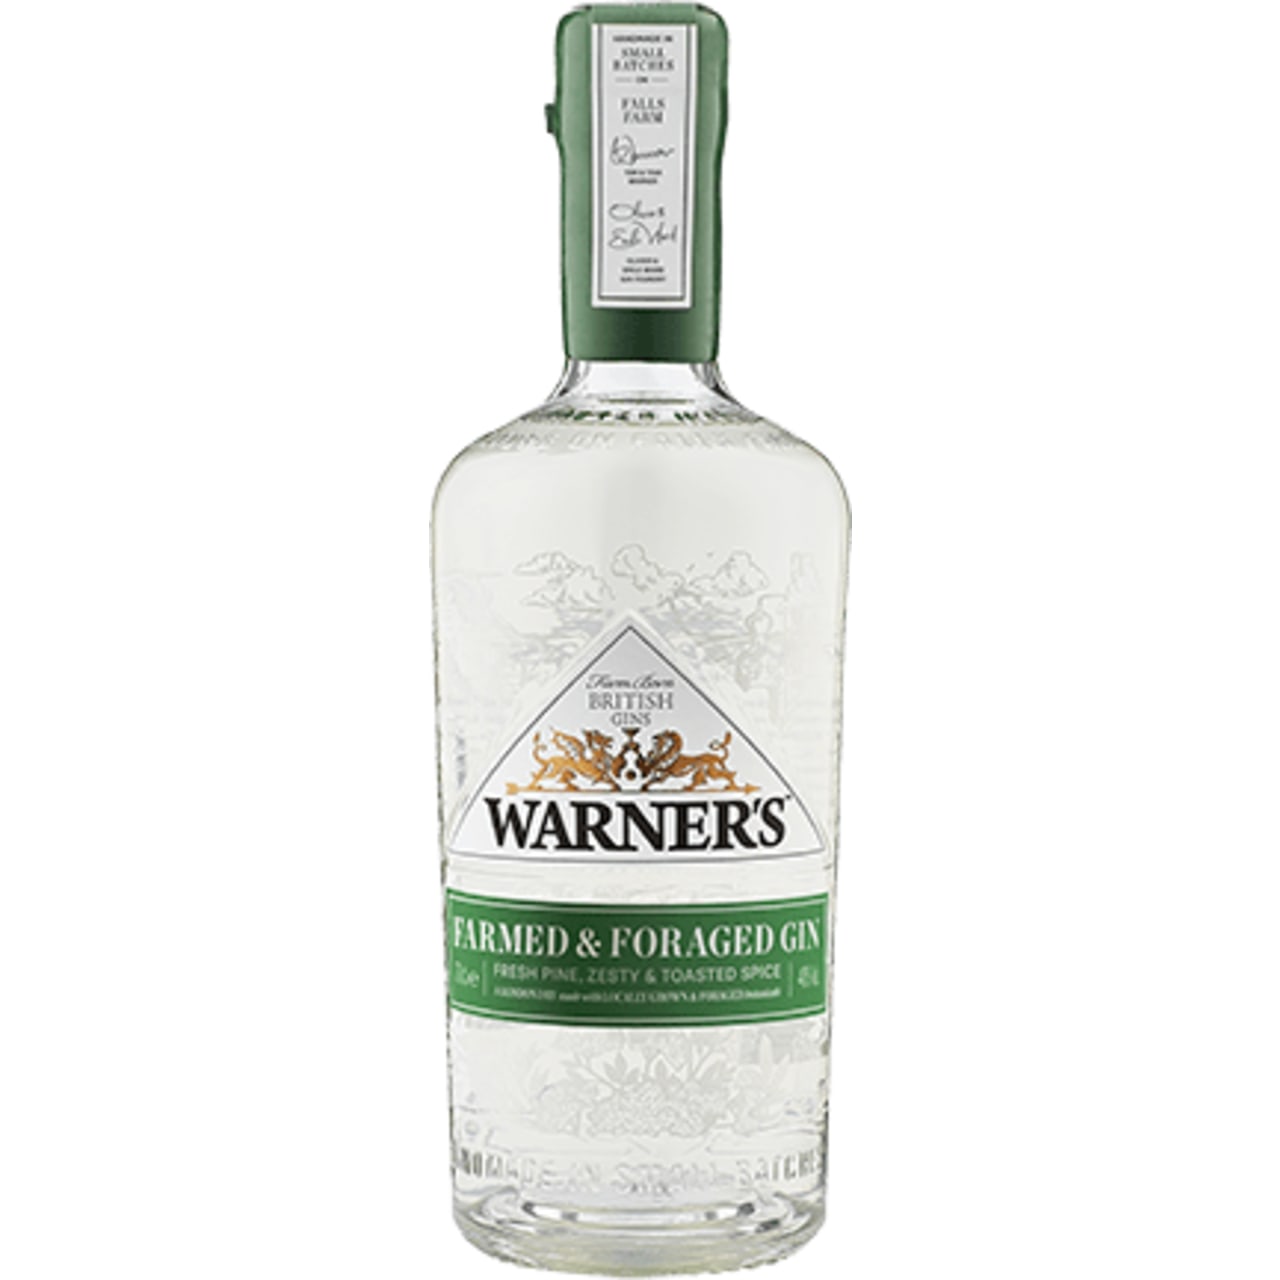 Warner's Farmed & Foraged Gin